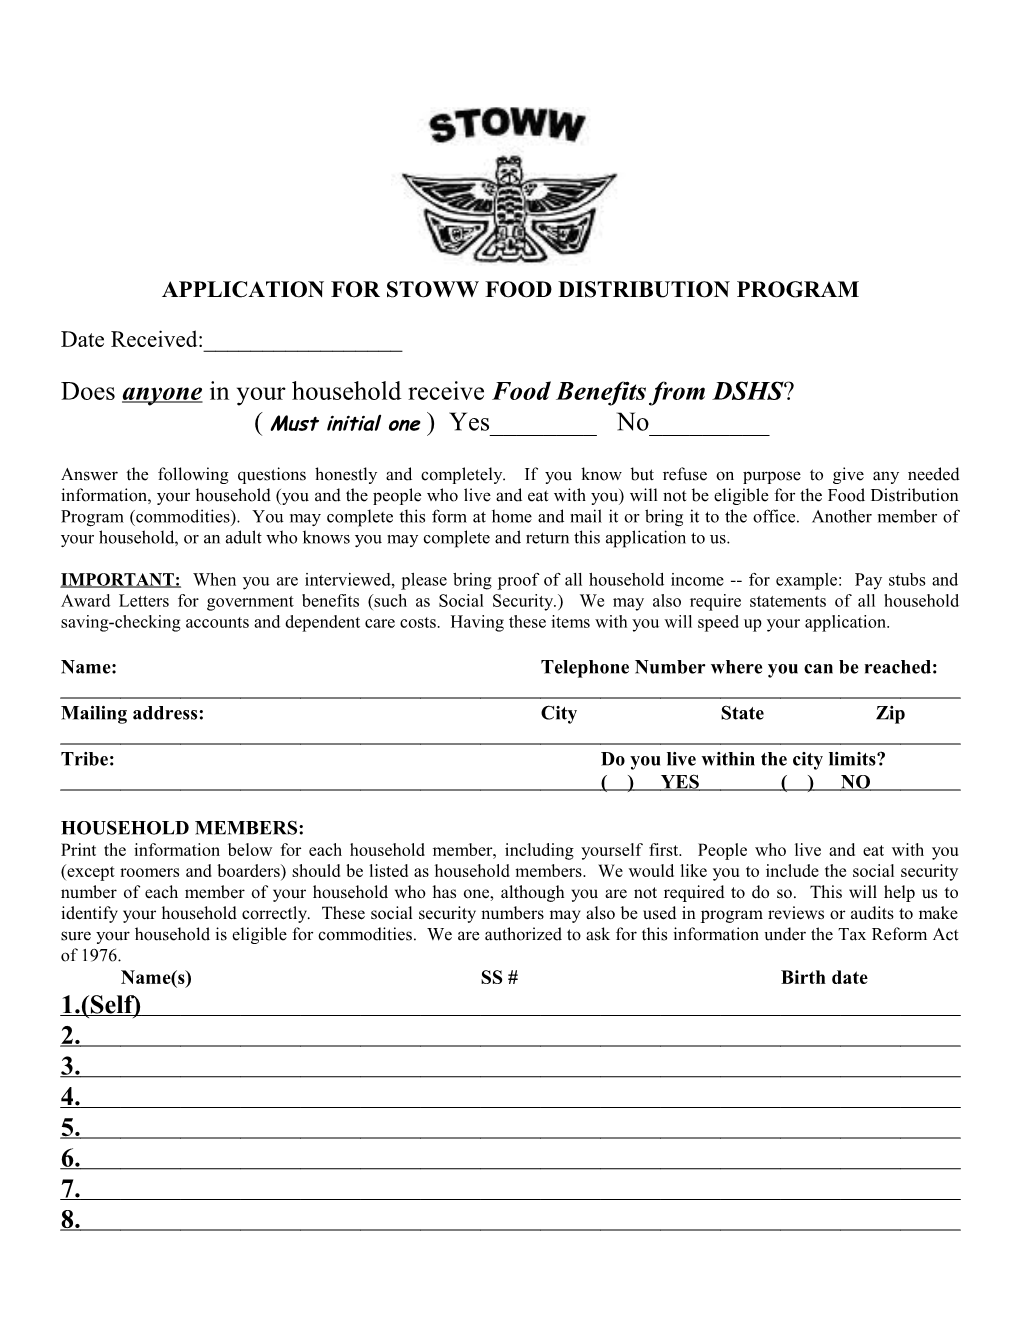 Application for Stoww Food Distribution Program